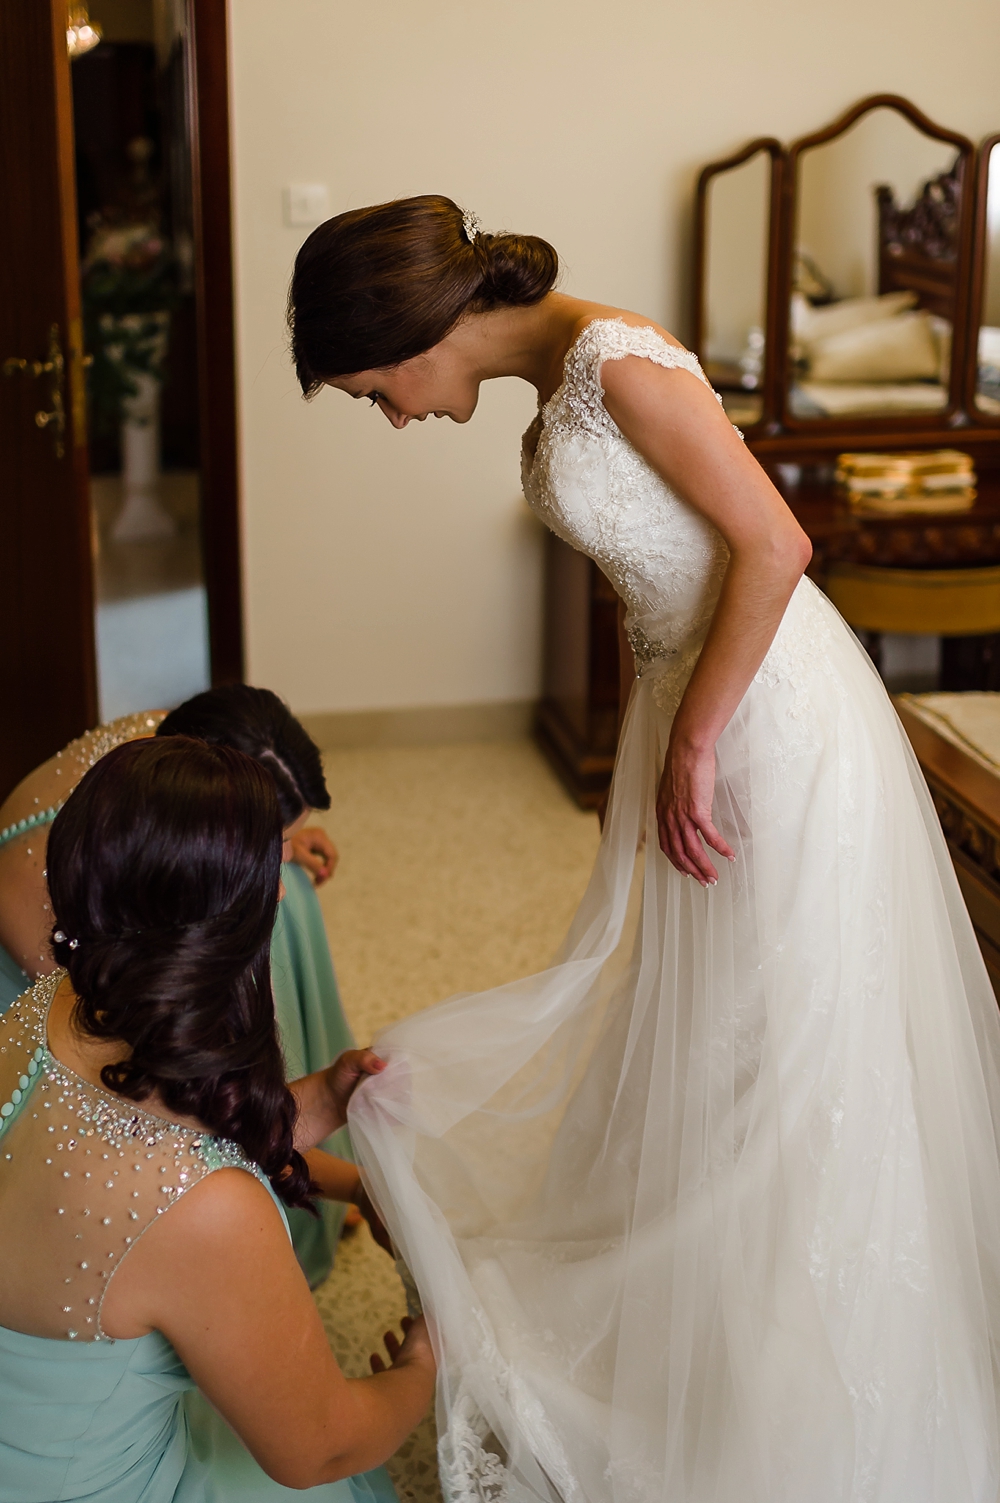 Maria & Fiobian - Excelsior Floriana - Wedding Photography Malta